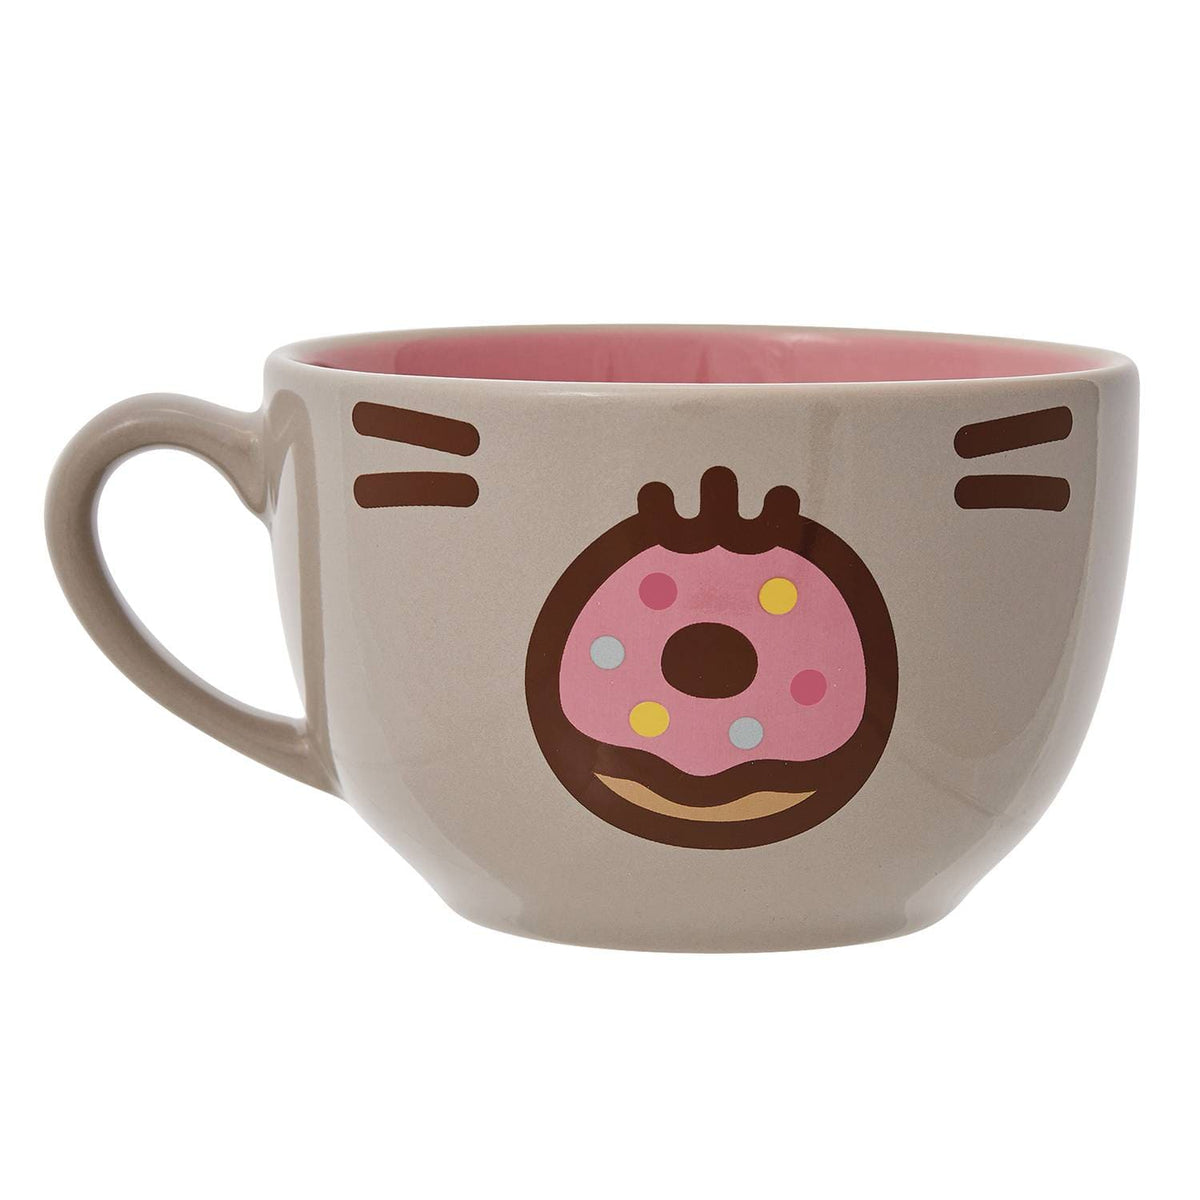 Enesco: Pusheen the Cat - Ceramic Mug, Latte 18 Oz.